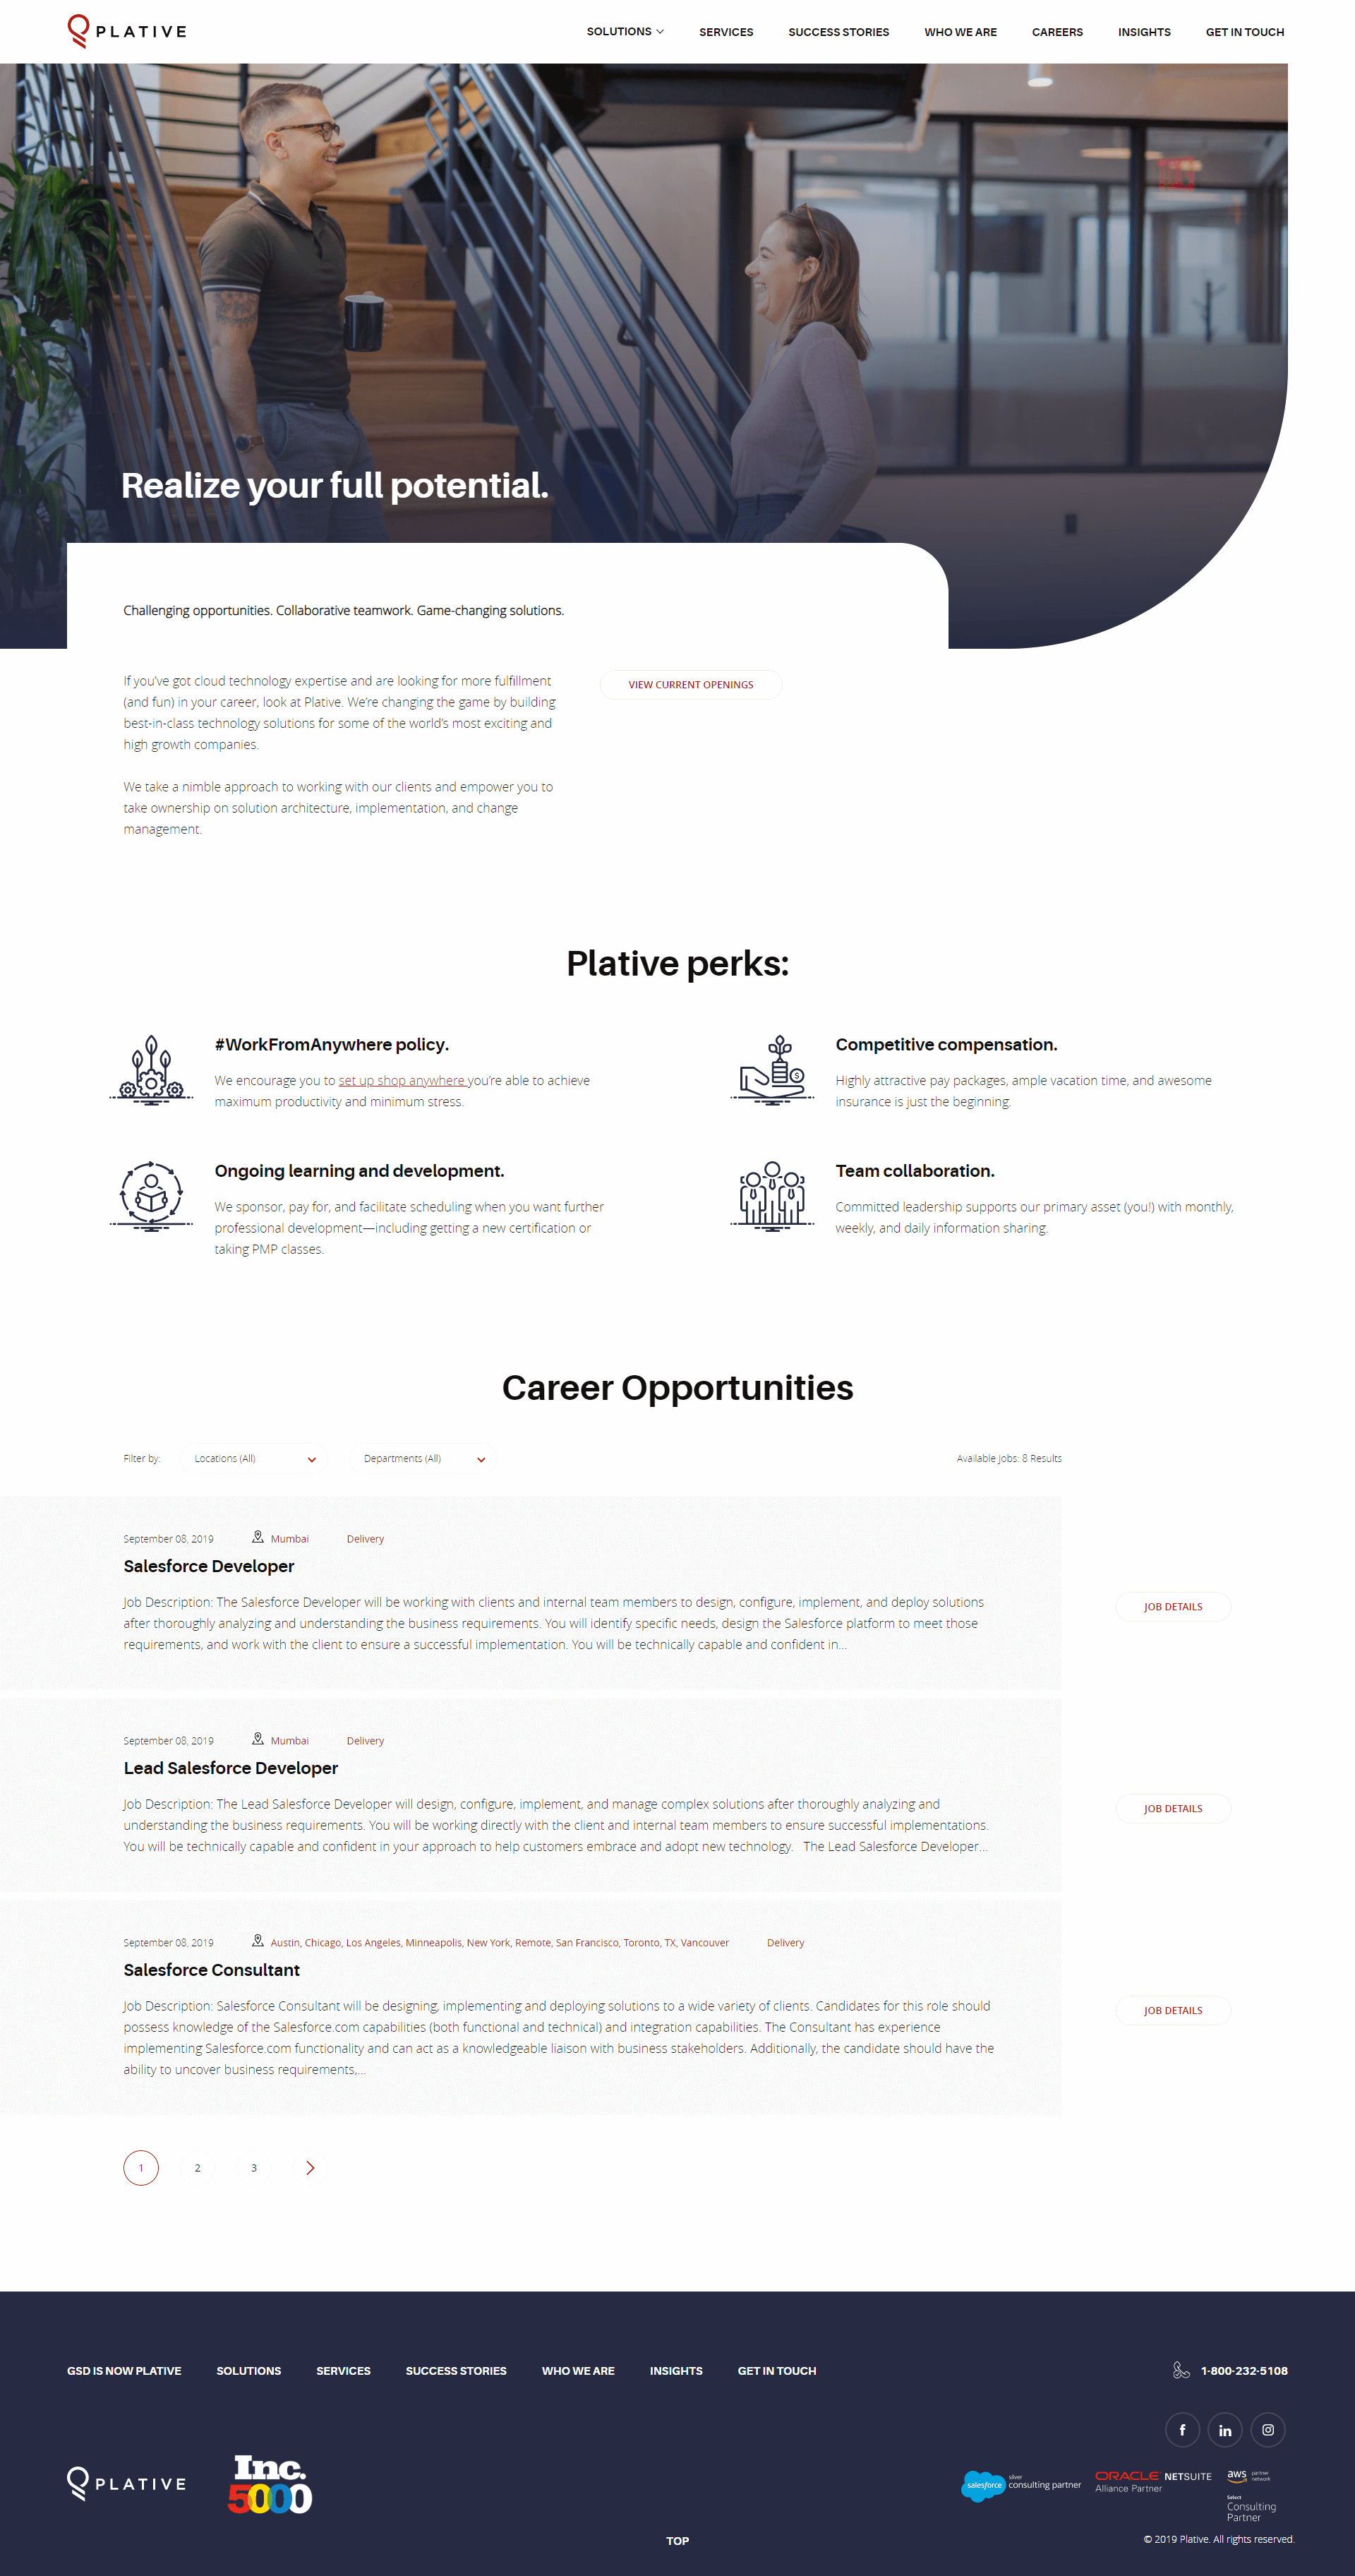 Plative's Careers Page Design & Development